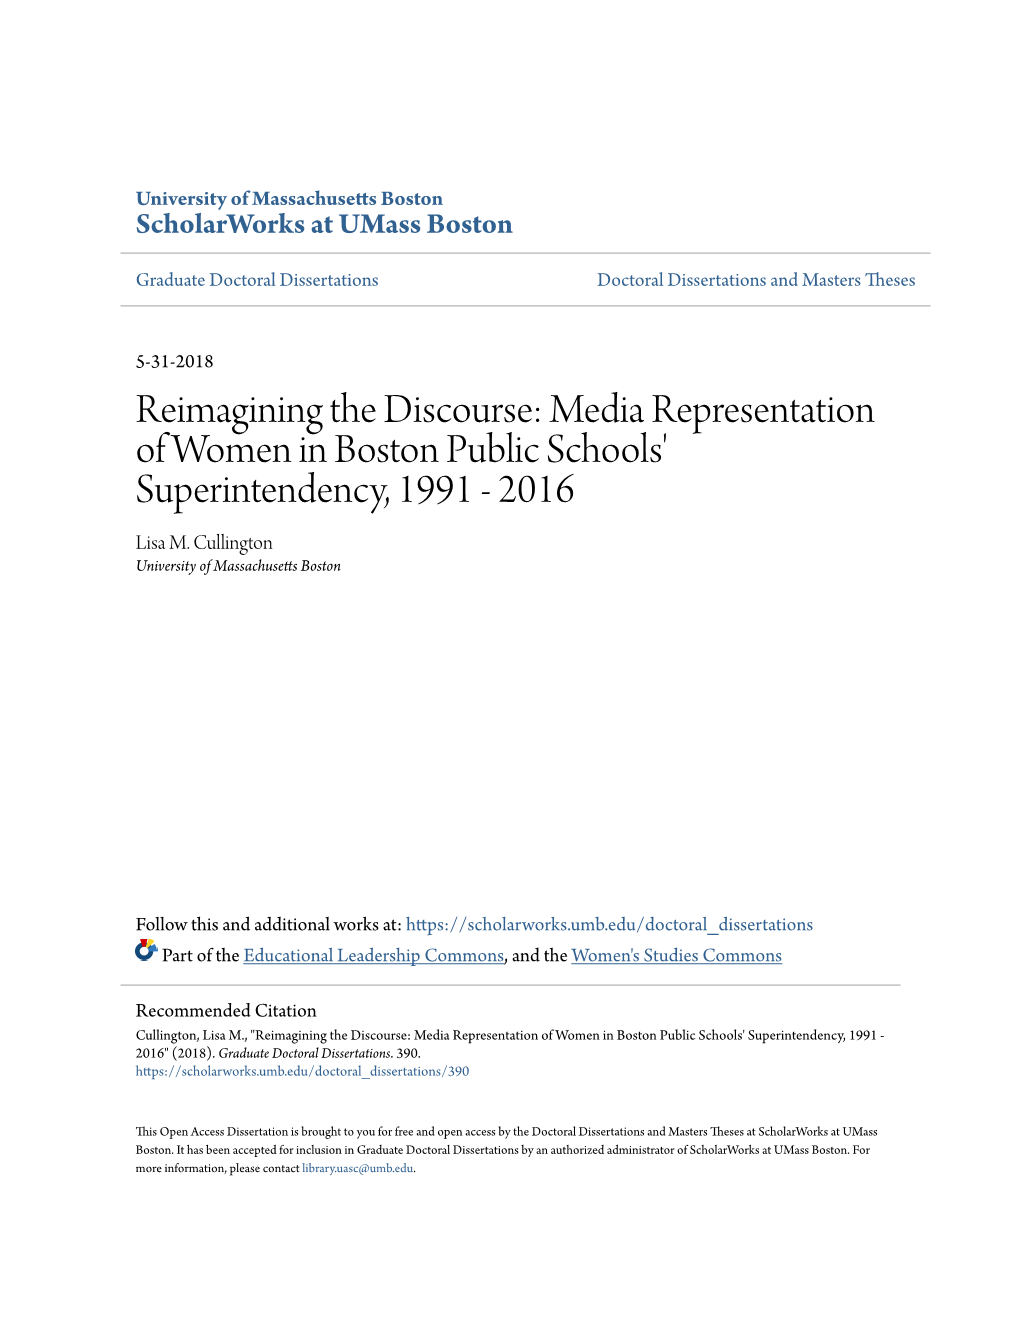 Reimagining the Discourse: Media Representation of Women in Boston Public Schools' Superintendency, 1991 - 2016 Lisa M